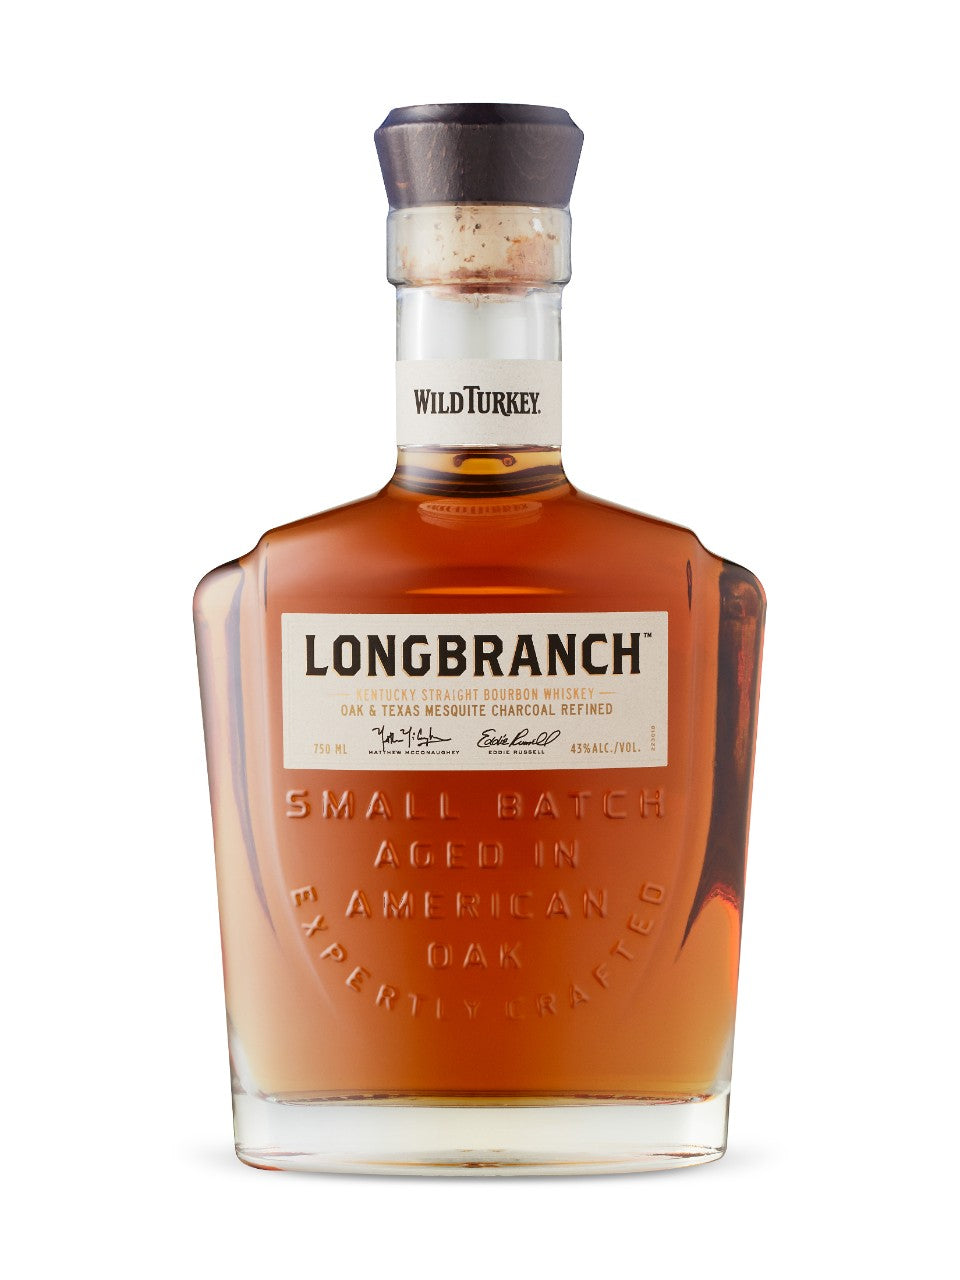 Wild Turkey Longbranch Bourbon Whiskey 750 mL bottle